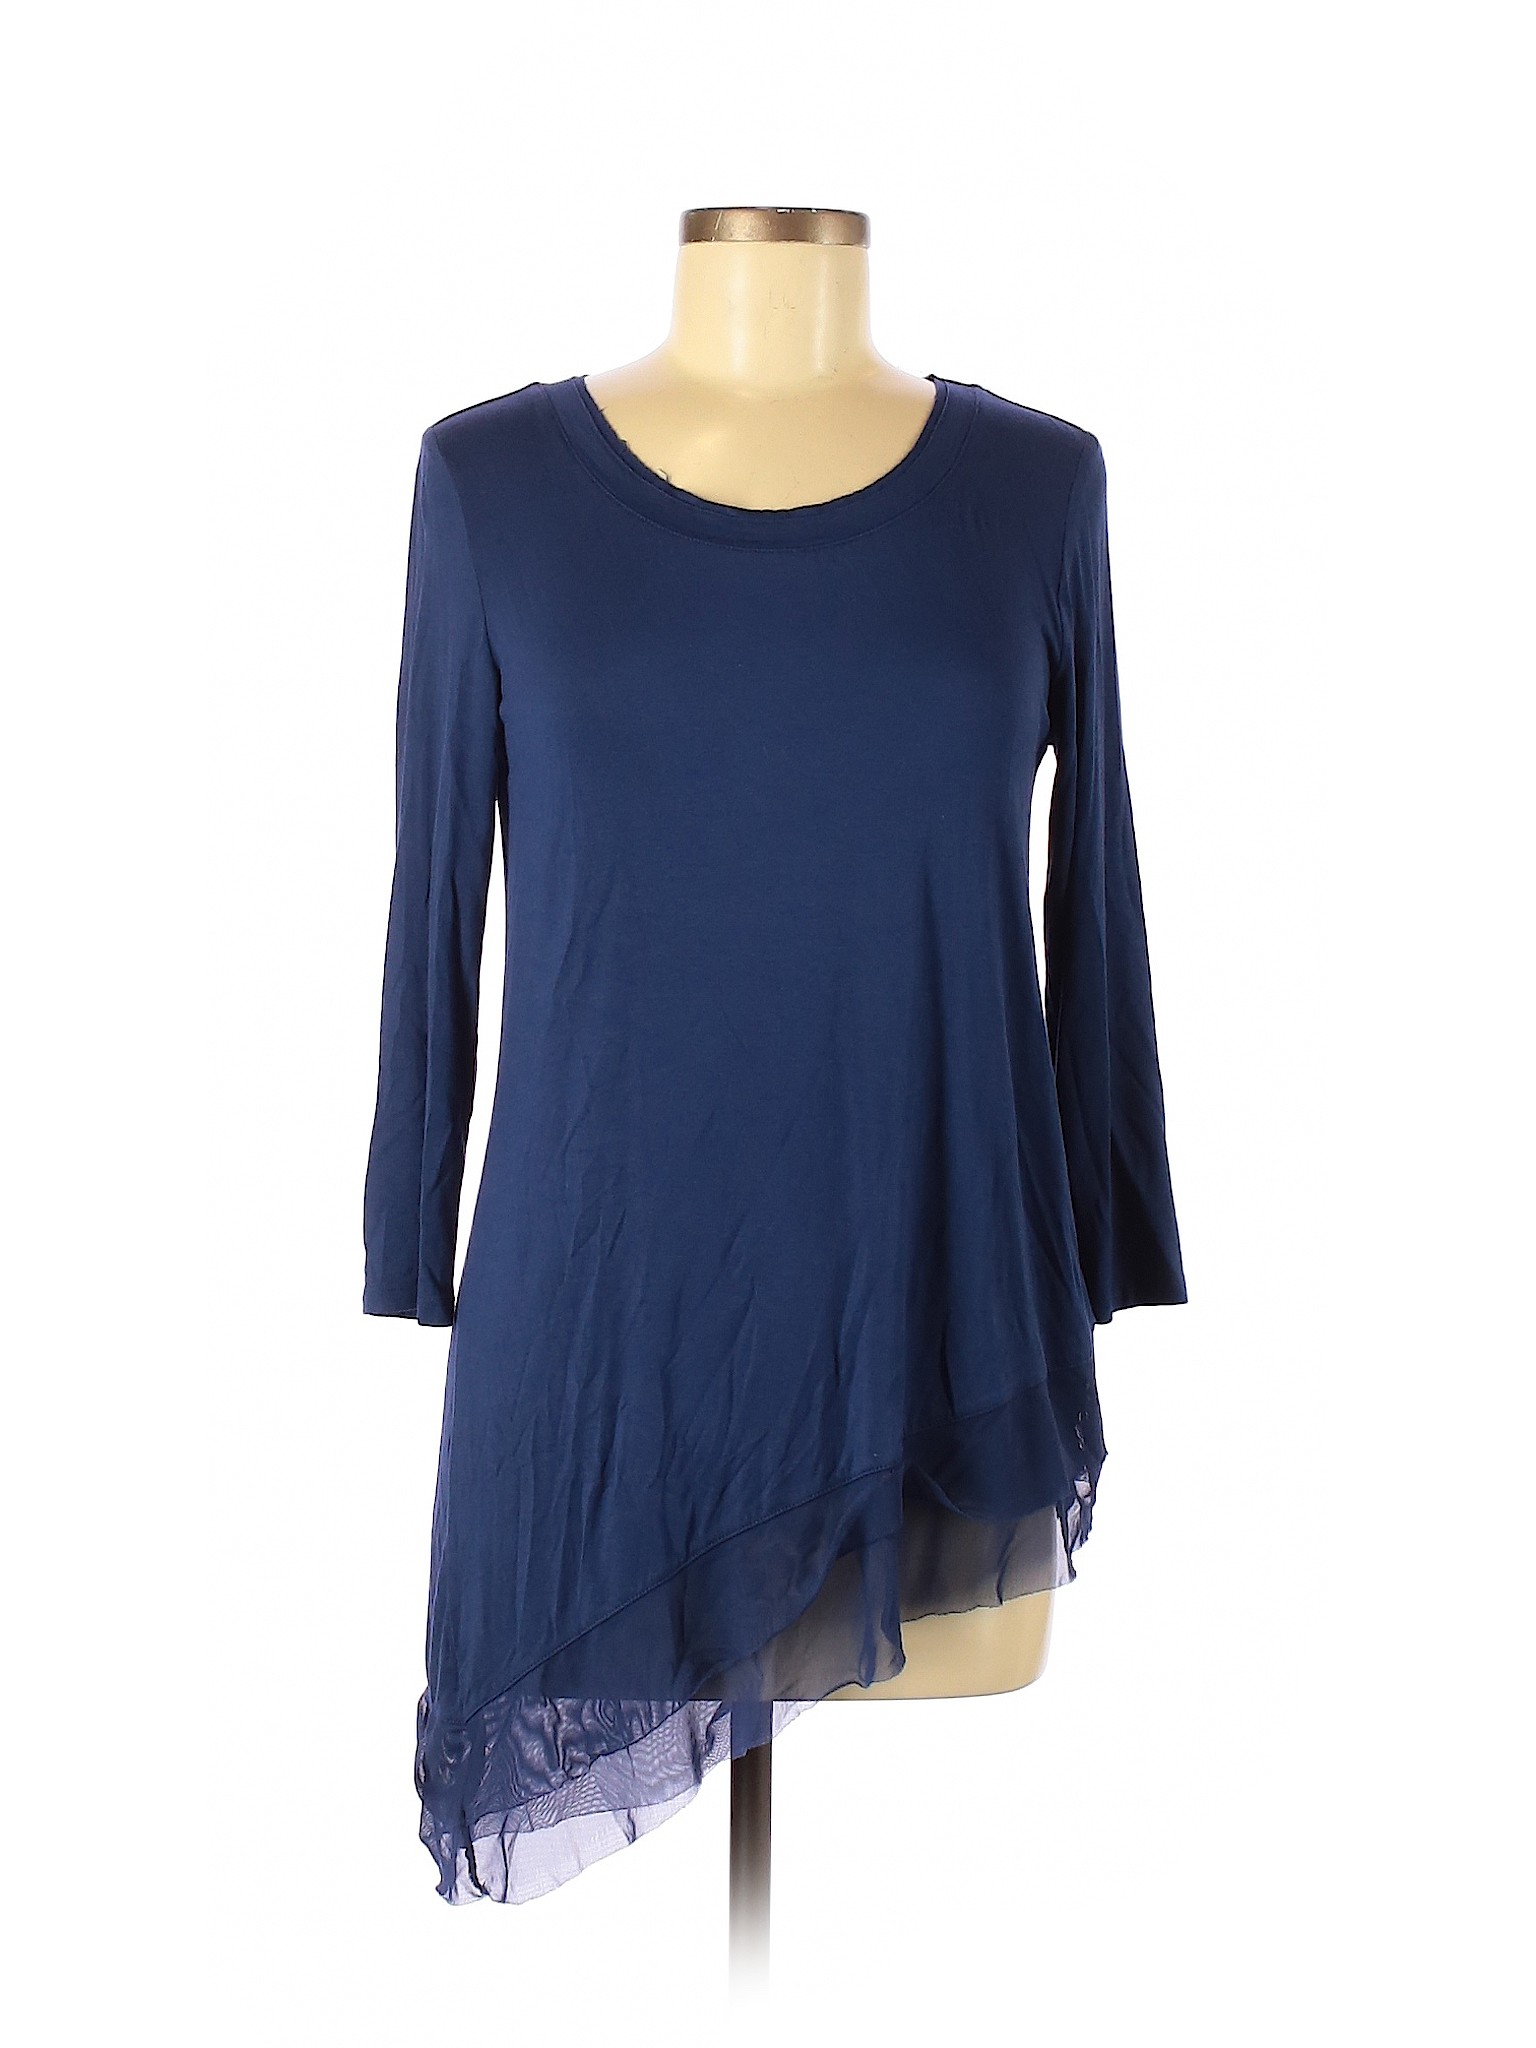 Cupio Women Blue 3/4 Sleeve Top M | eBay